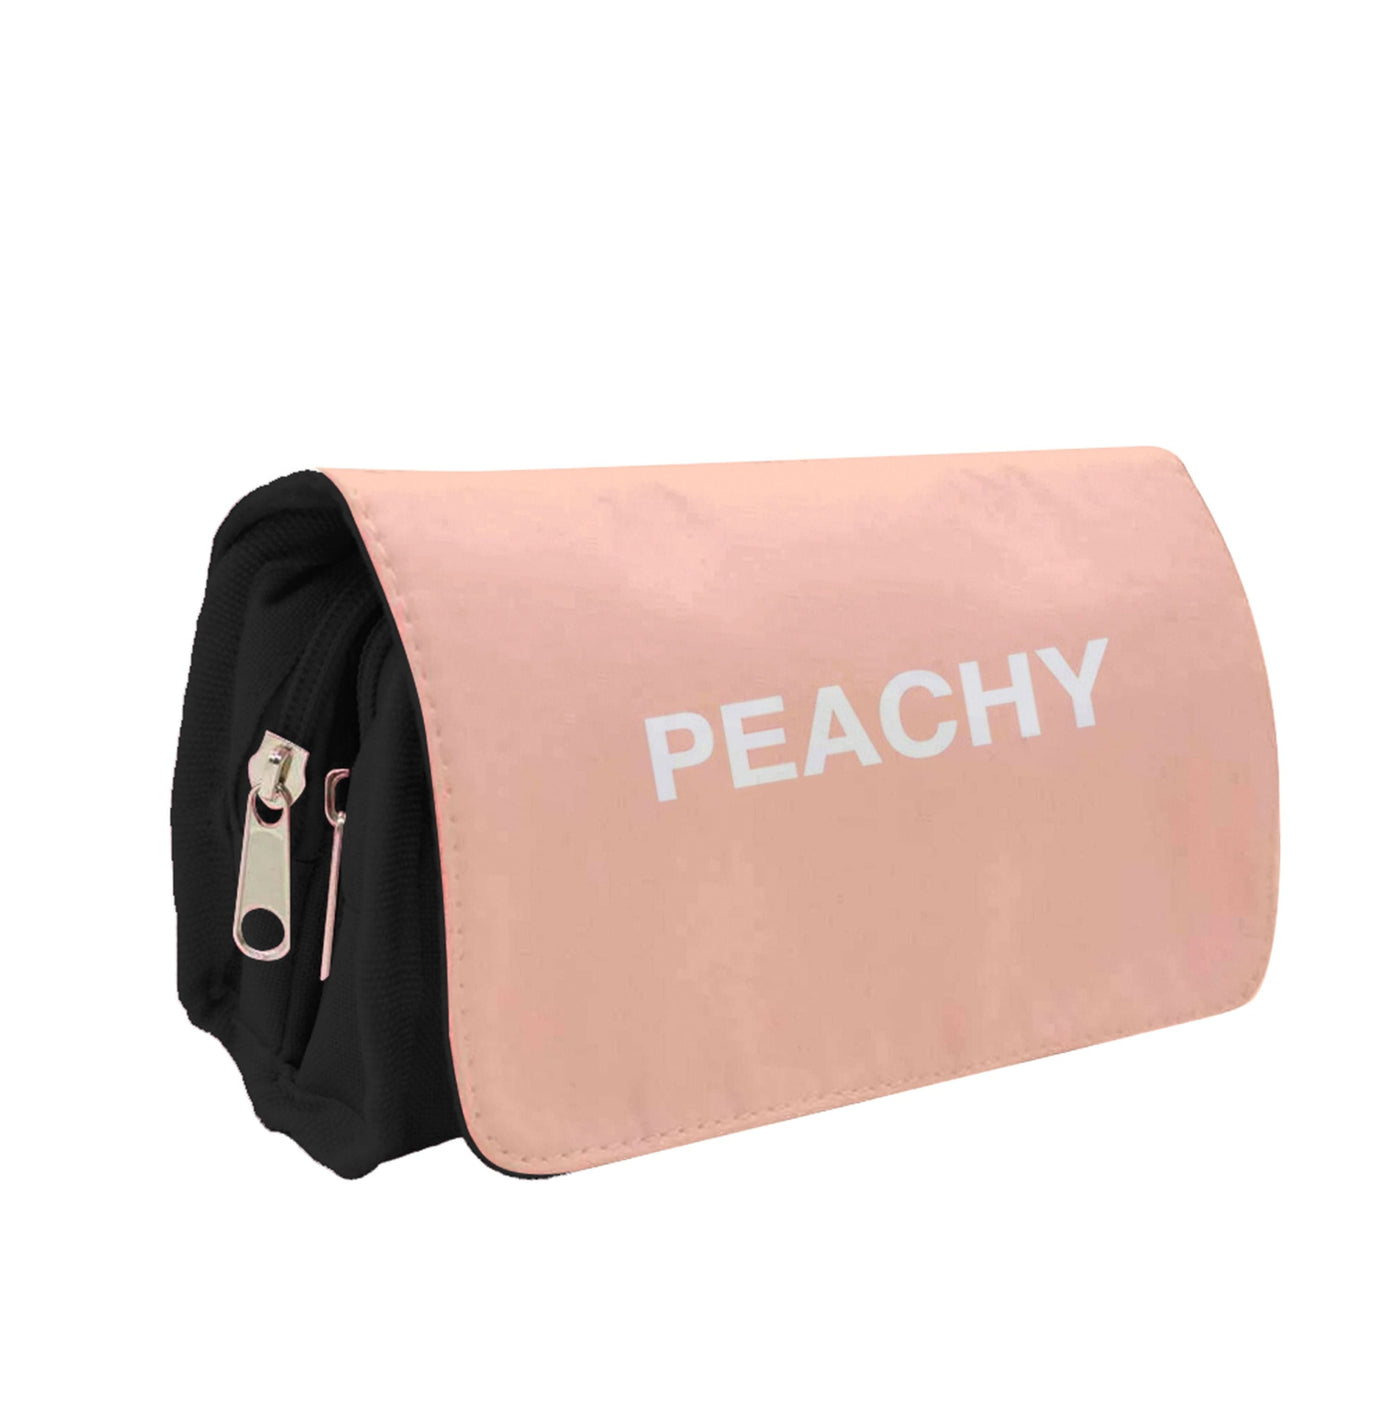 Peachy Pencil Case